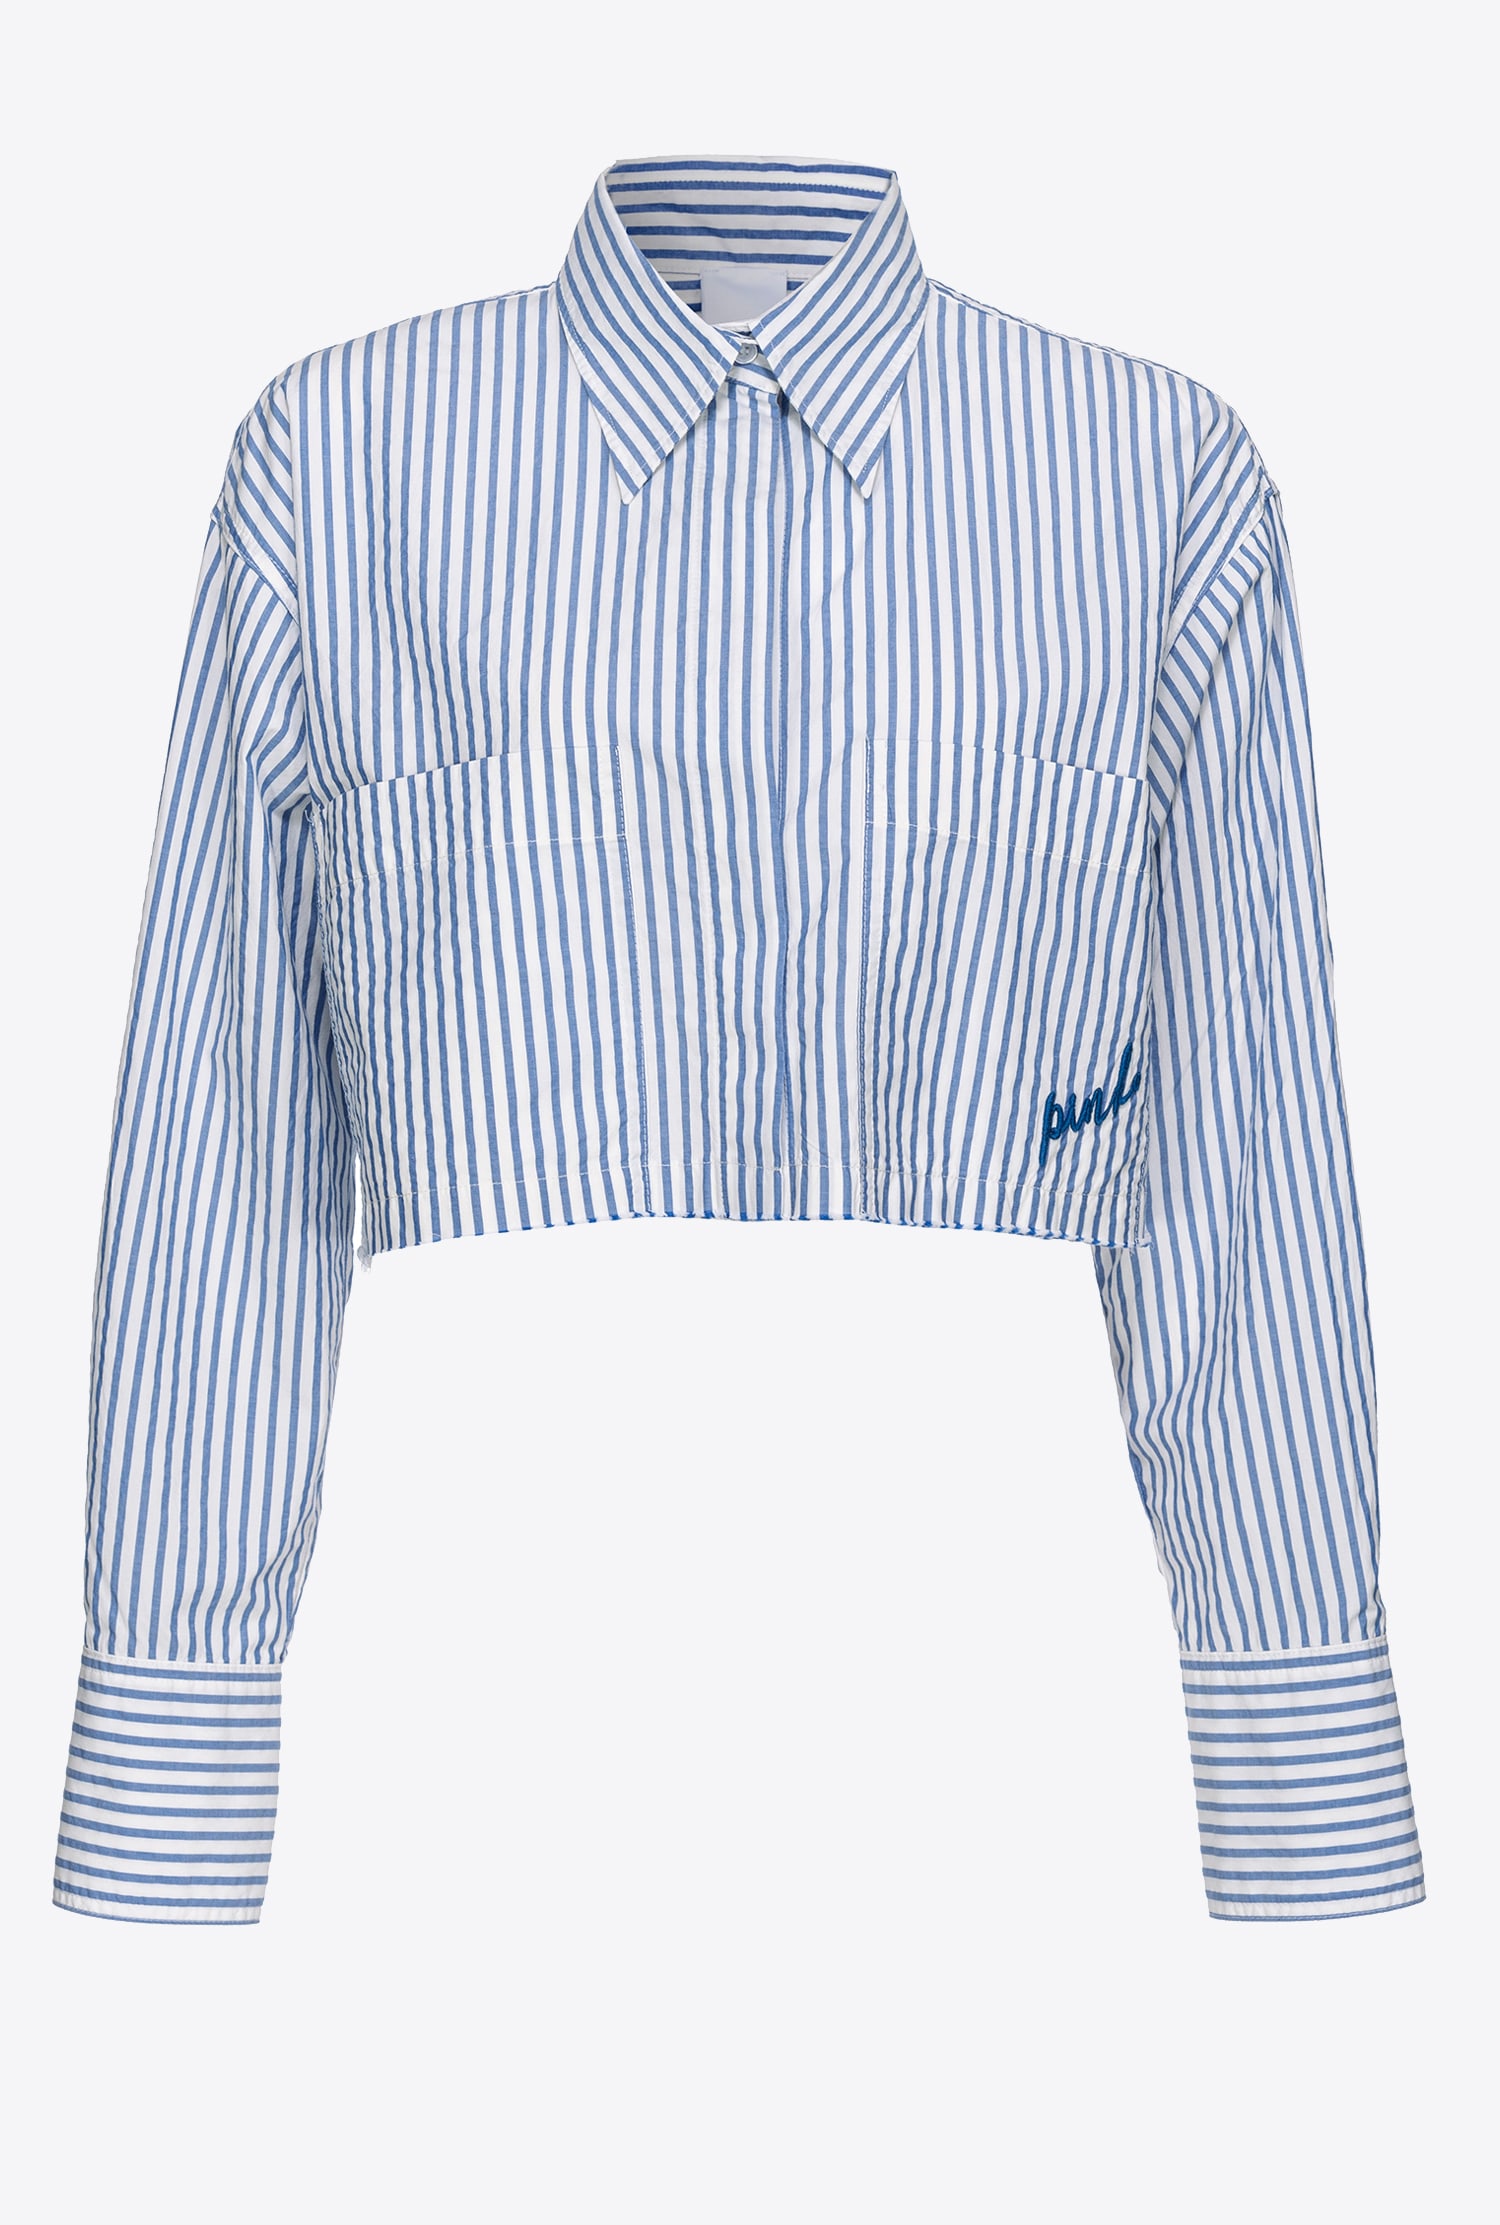 Pinko Striped Short Shirt In Blanc/azur